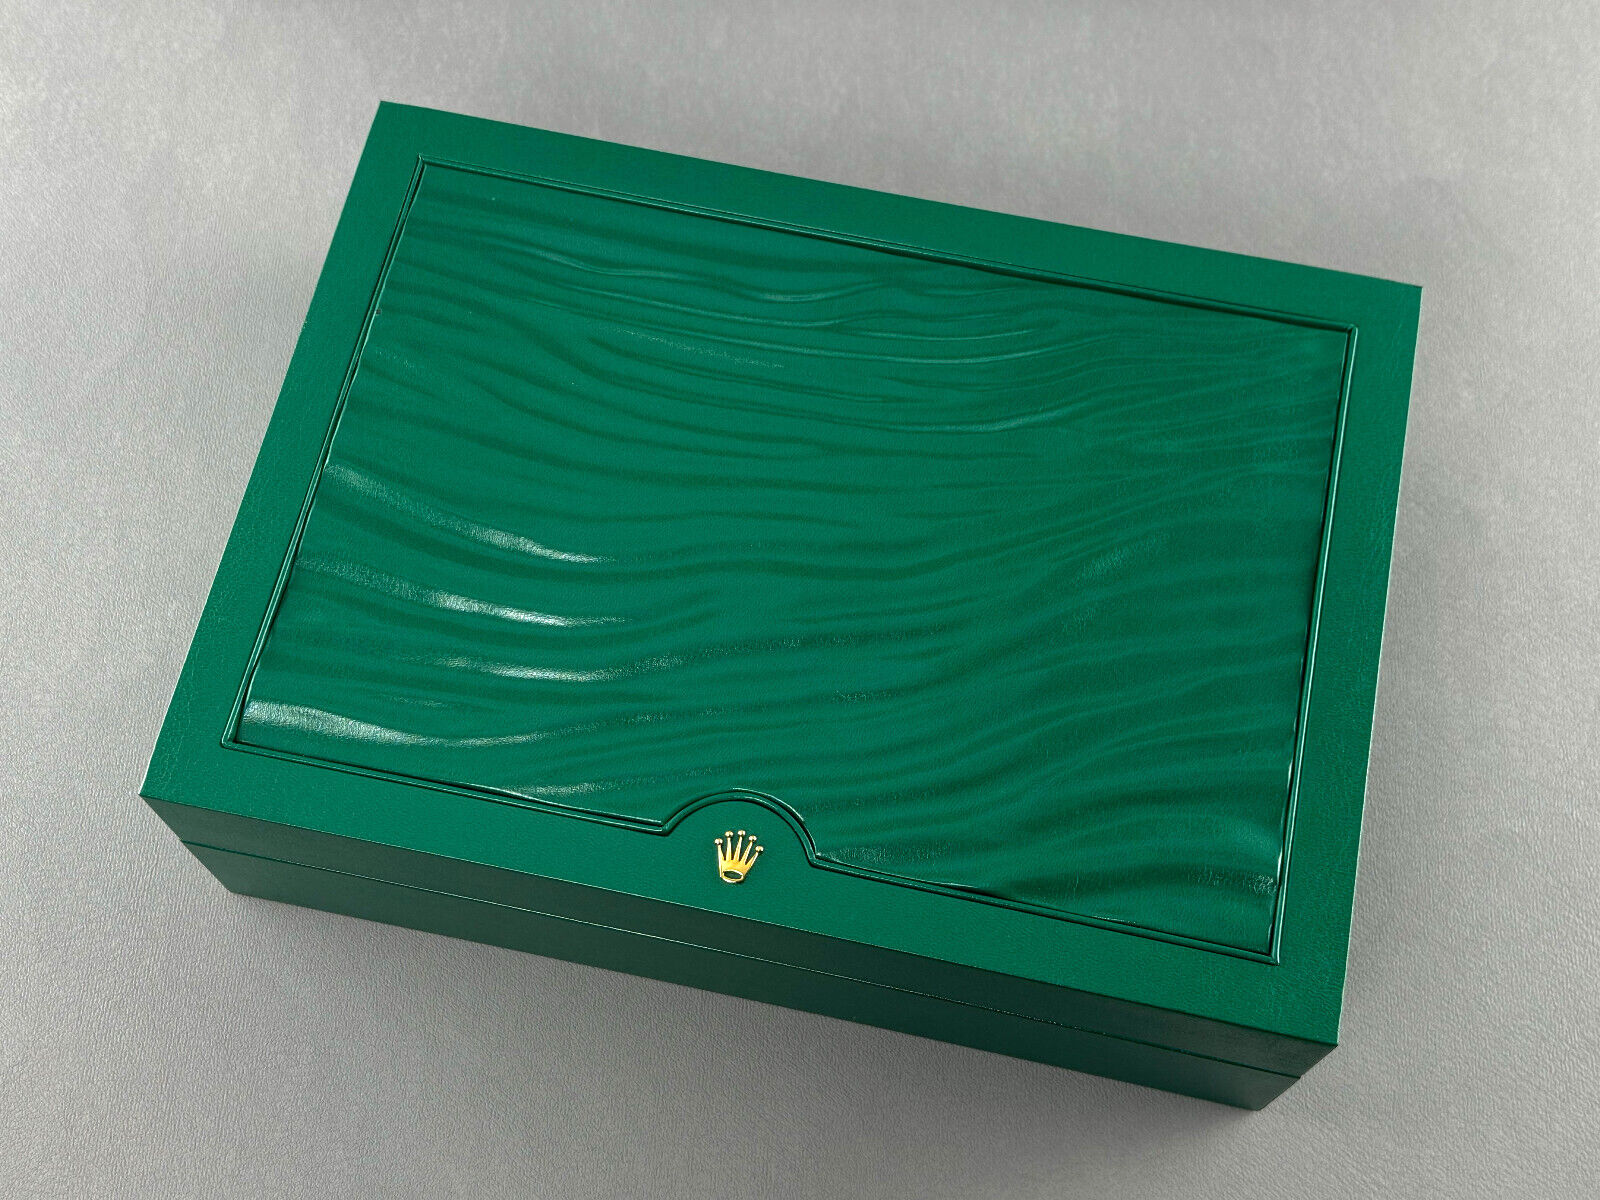 Rolex Oyster Box Größe Size XL Uhrenbox Karton watch-box 39143.71 Grün Green